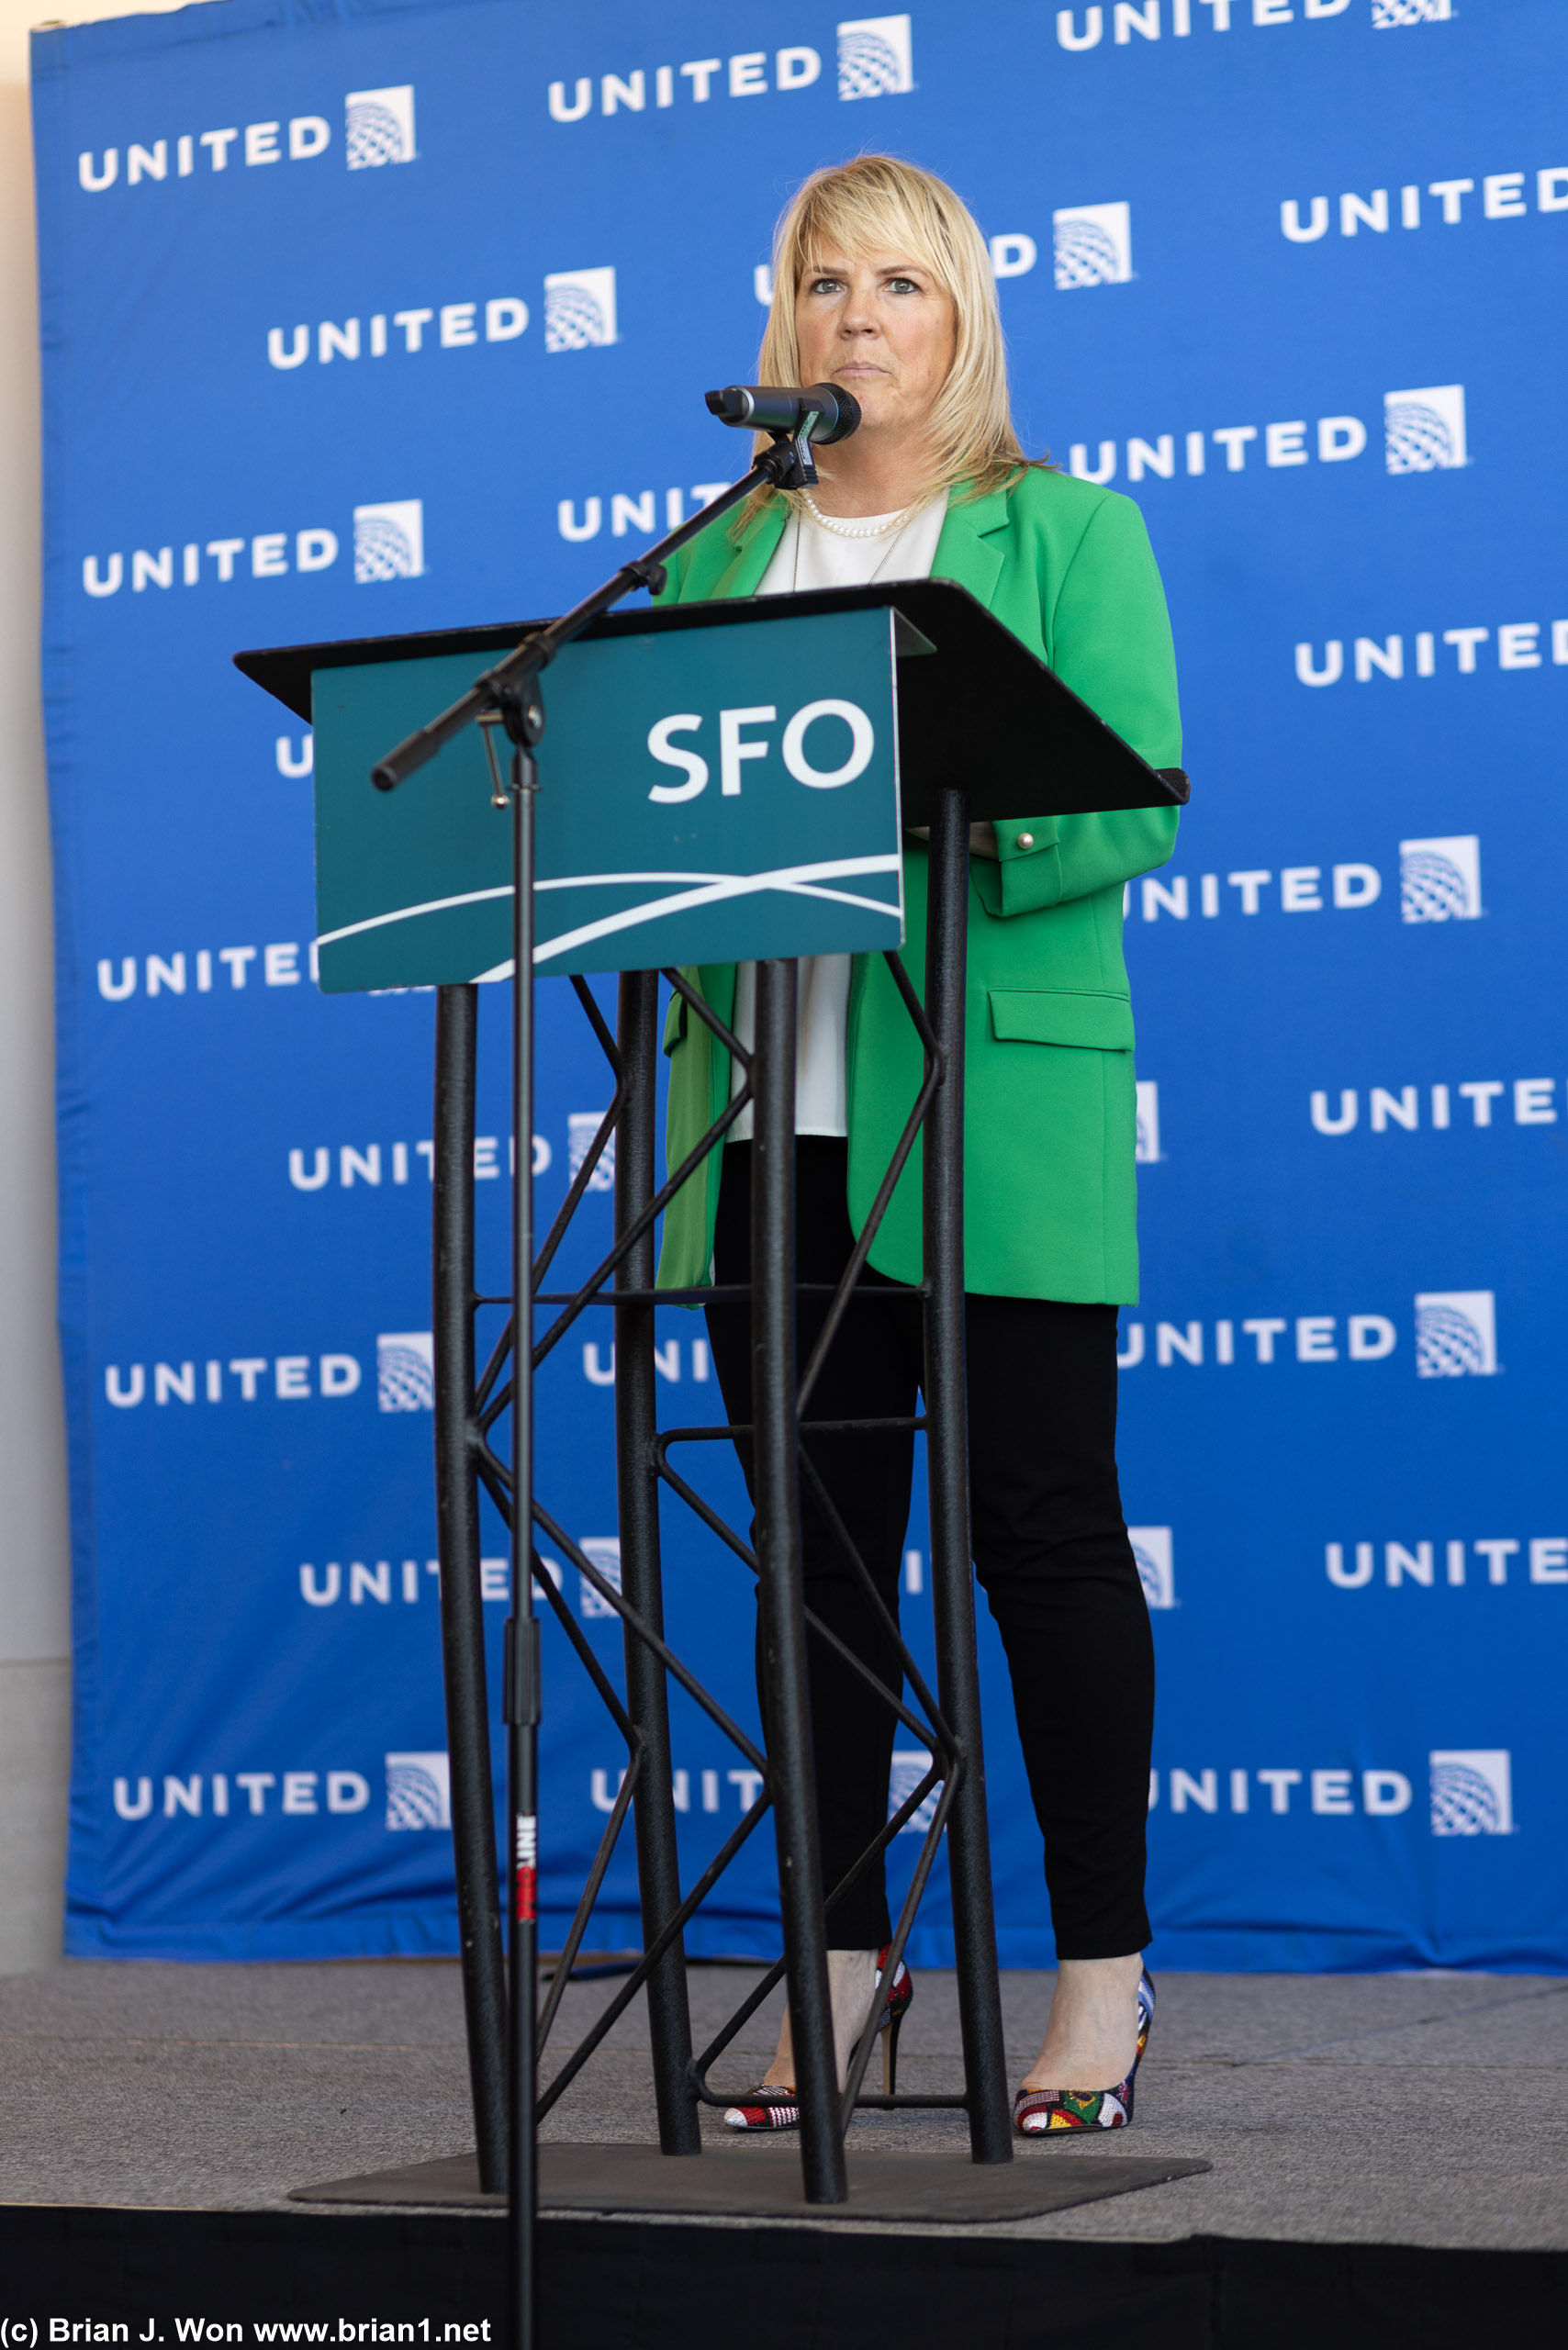 Lori Augustine, United Airlines VP of SFO.